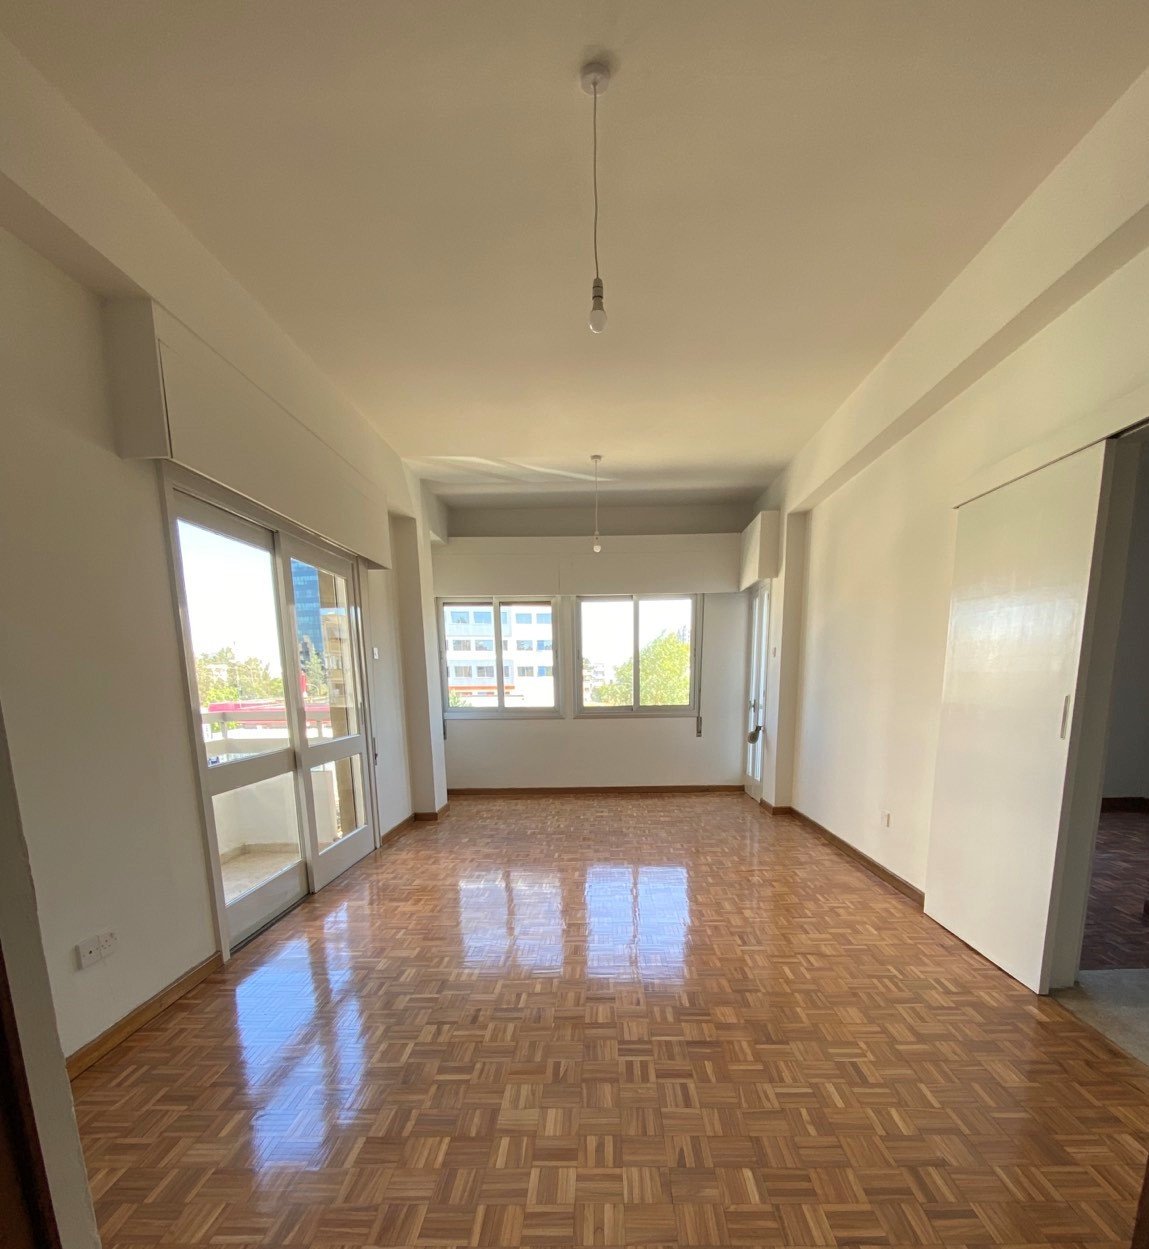 For Sale: Apartment (Flat) in Agioi Omologites, Nicosia for Rent | Key Realtor Cyprus